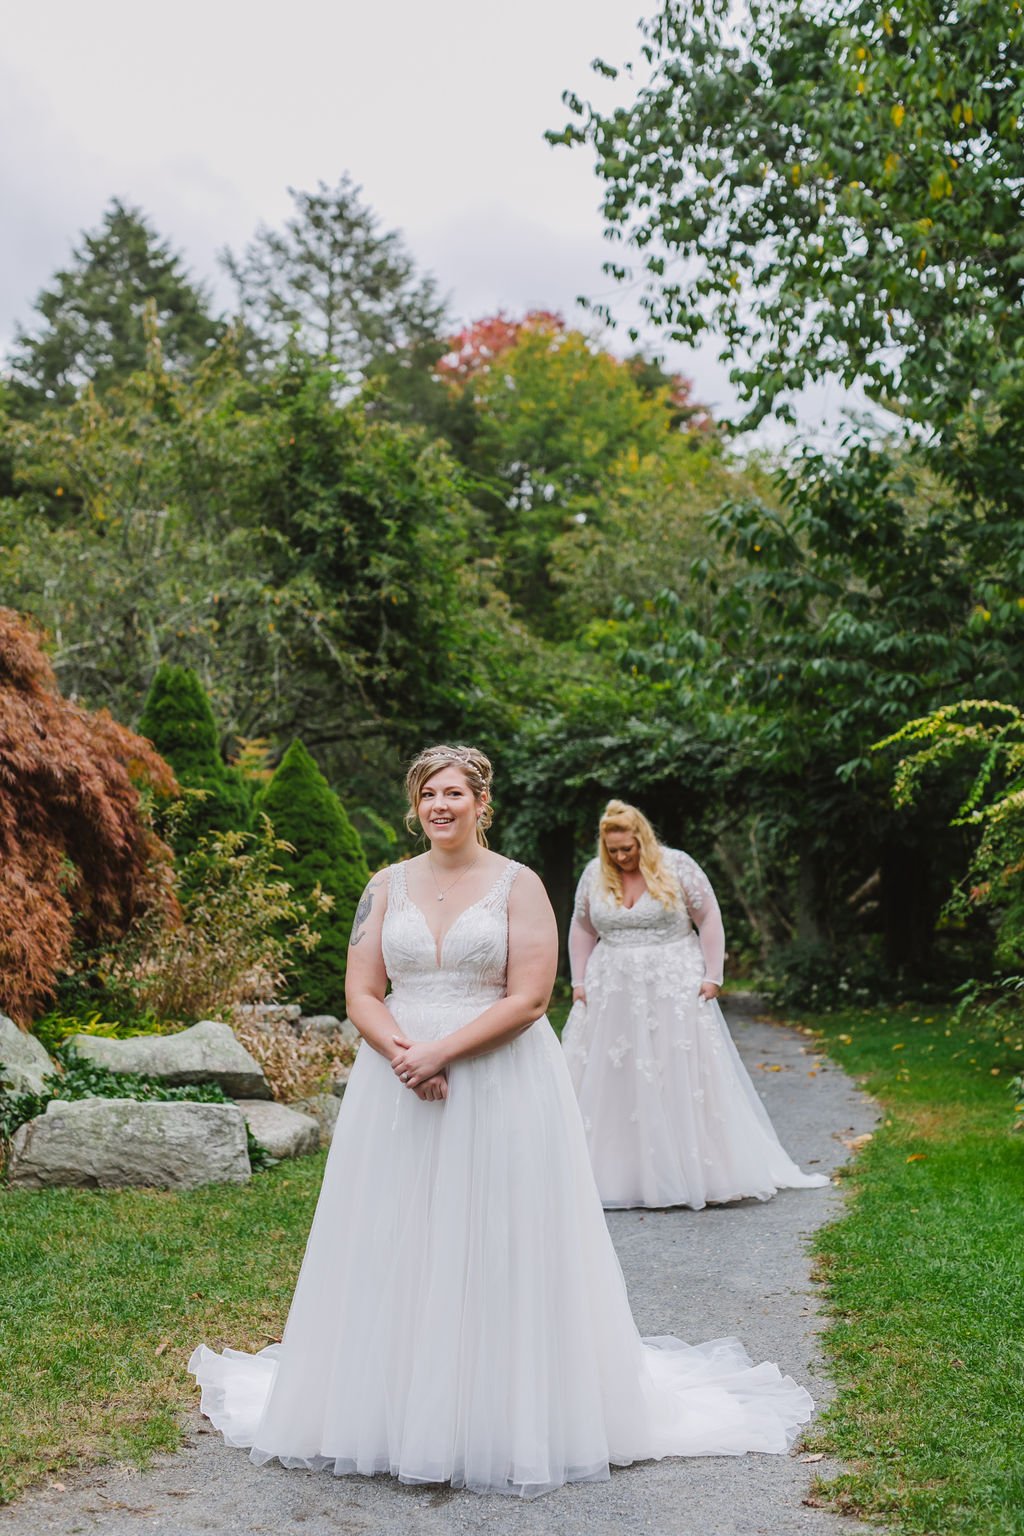 Alex+LaurenWedding-emily tebbetts photography-67 borderland state park queer lesbian LGBTQ intimate wedding elopement boston wedding photographer.jpg